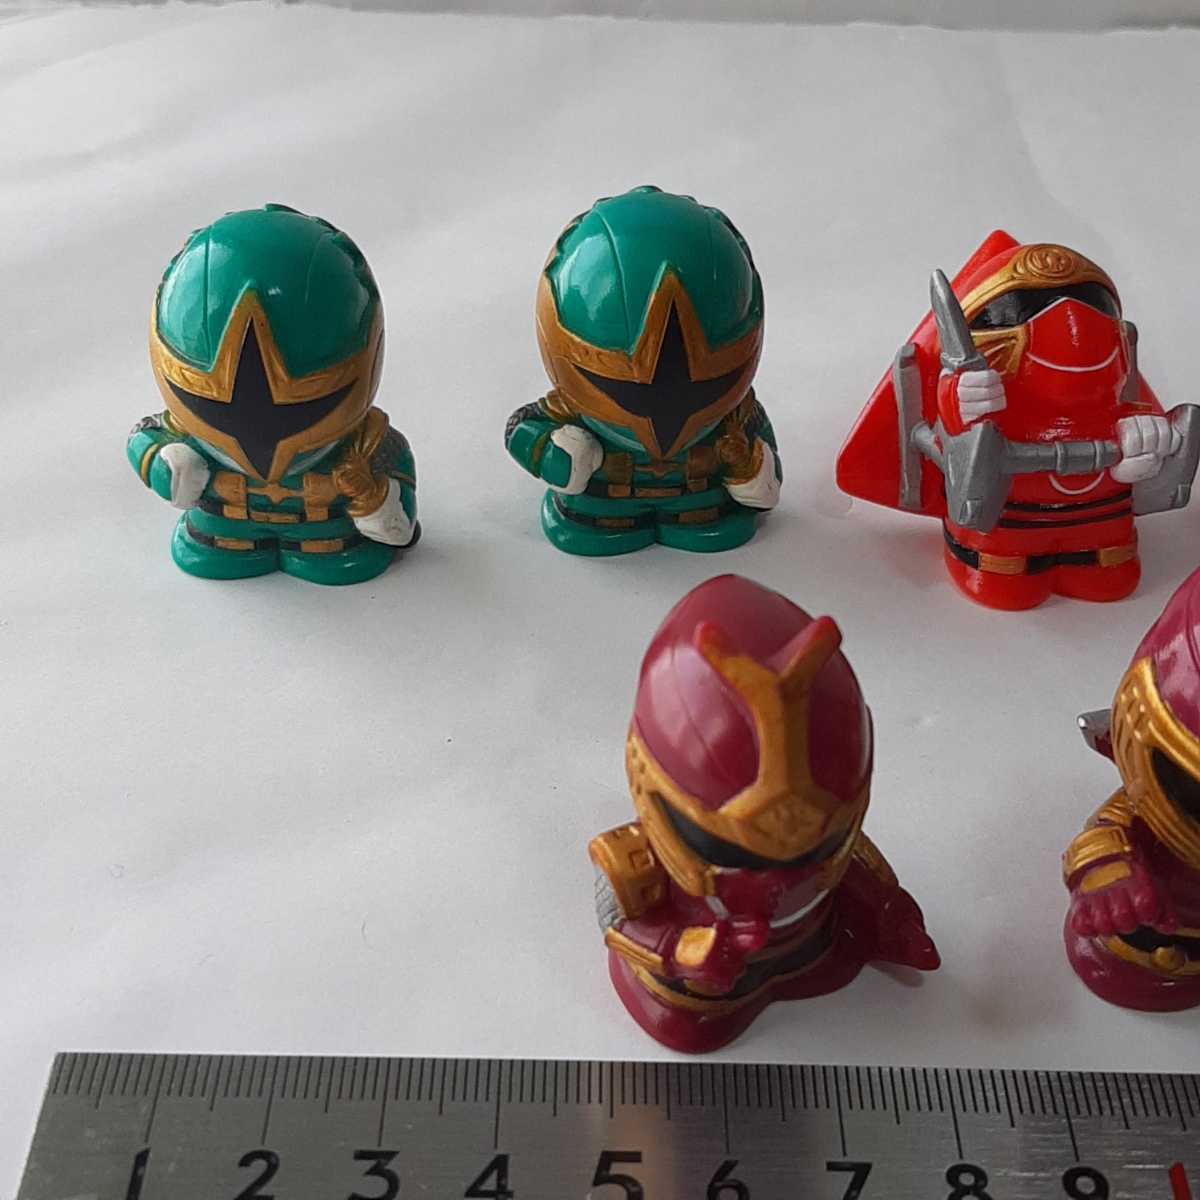  is li ticket ja- finger doll figure Squadron special effects shuli ticket ja- go laija- toy toy JAPAN TOYS POWER Rangers sofvi retro 